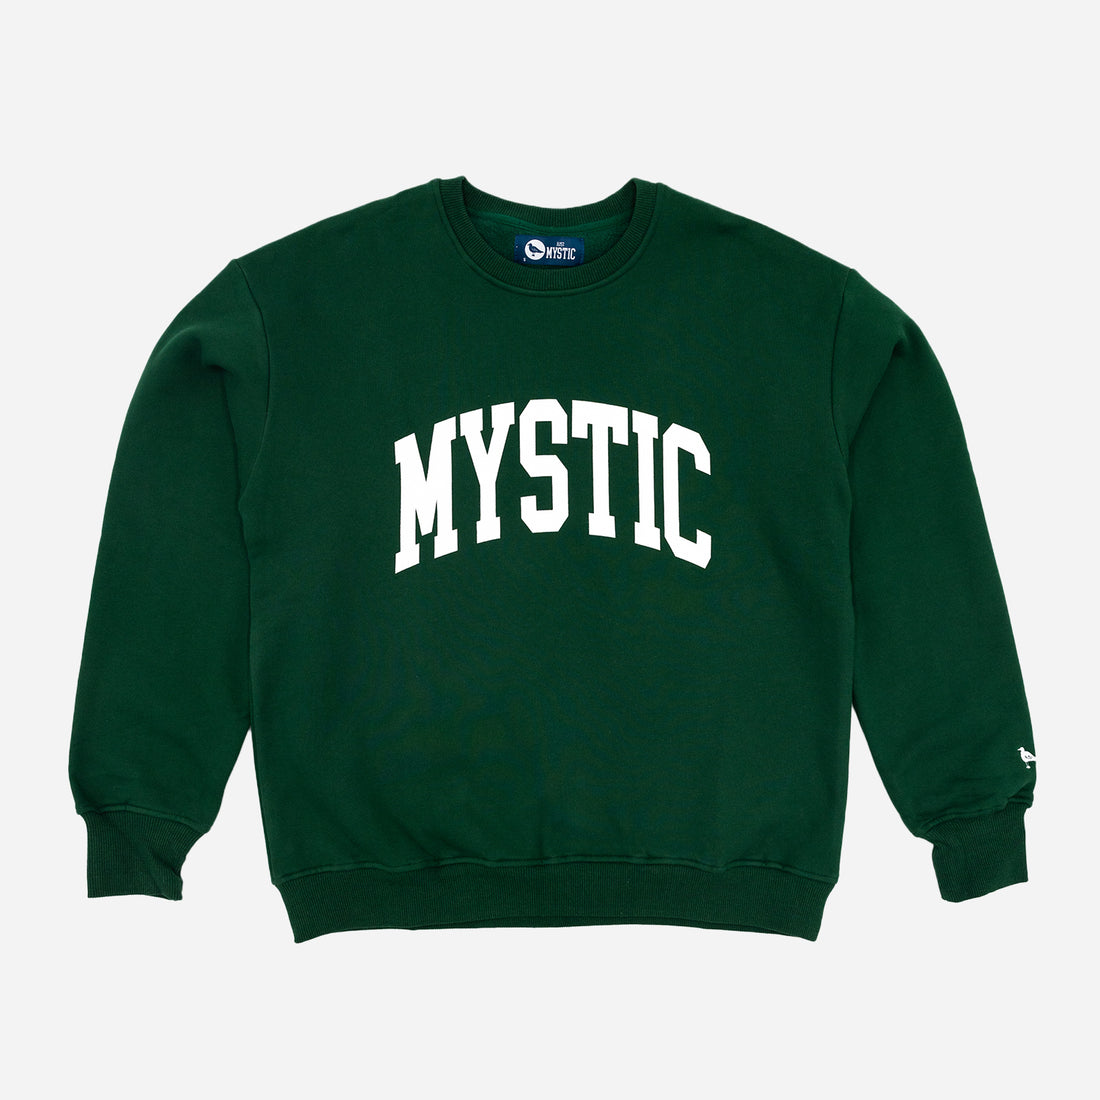 Buy Ivy Fleece Crew Sweatshirt - Order Hoodies & Sweatshirts